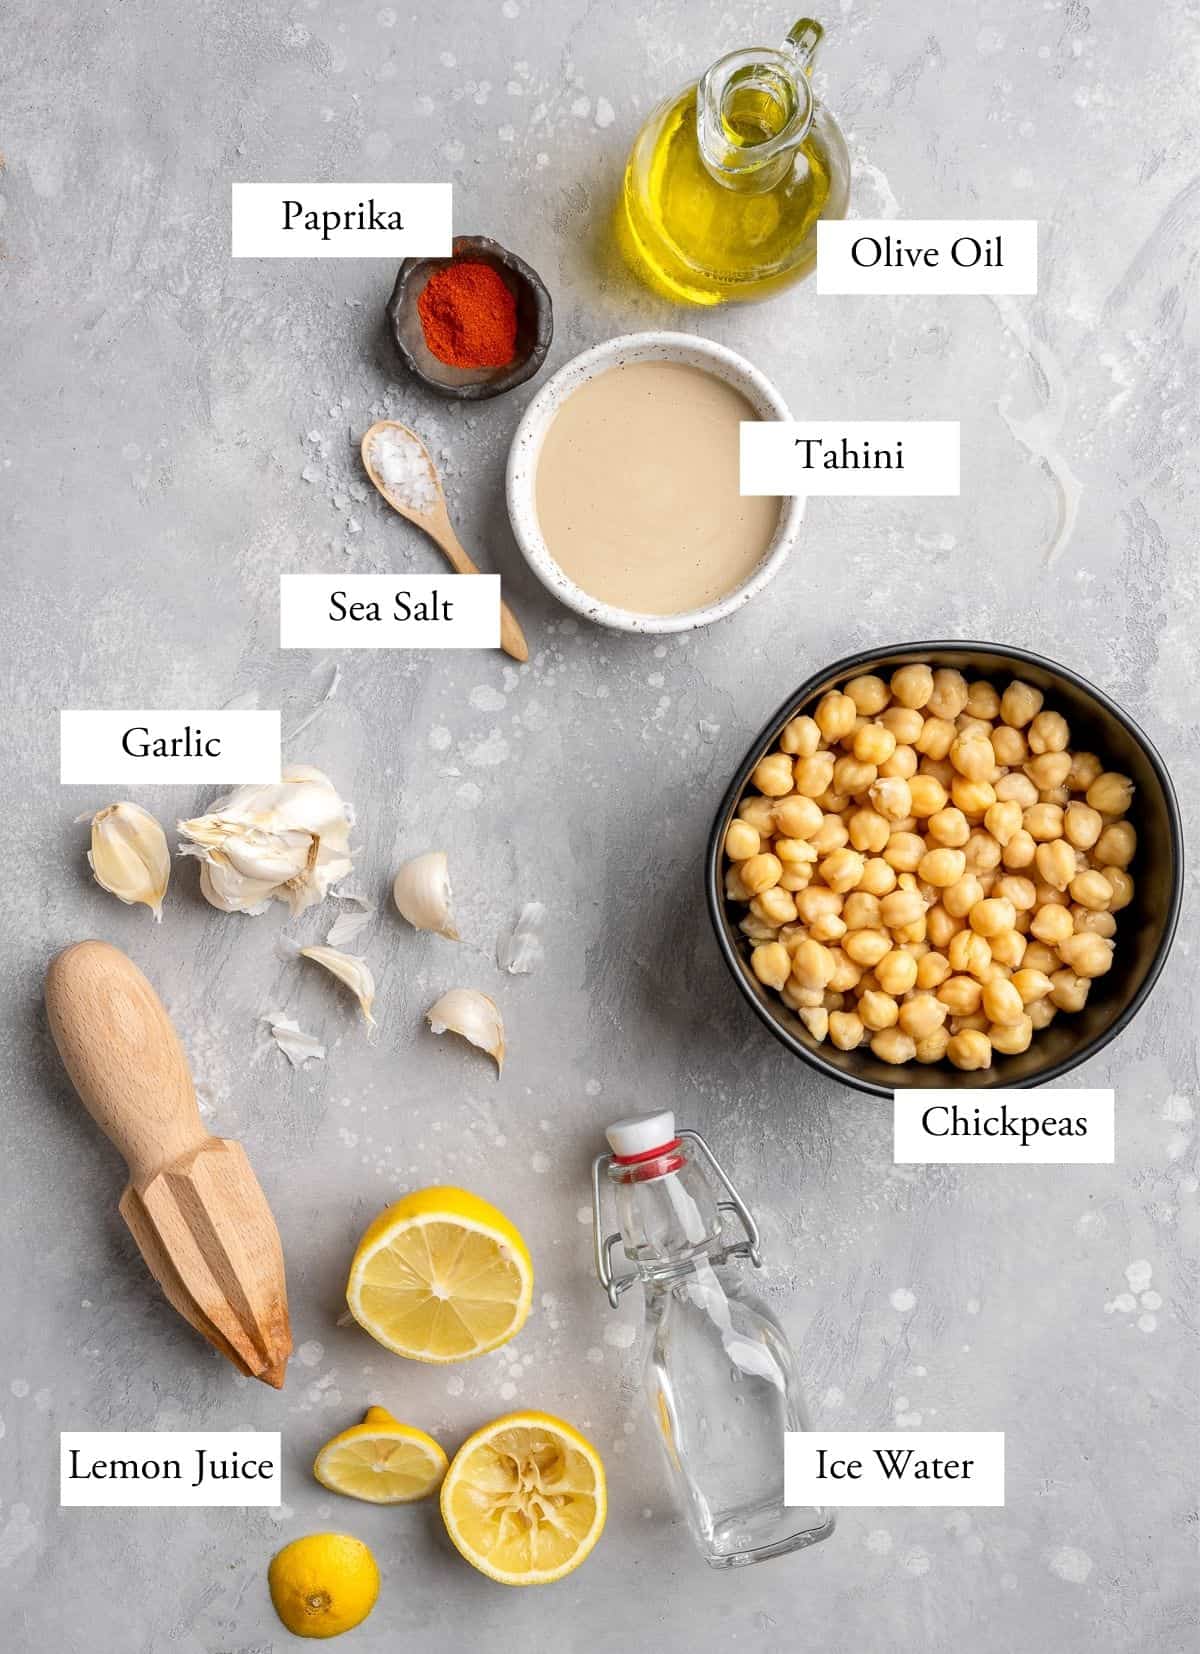 roasted garlic hummus ingredients on a table labeled - ice water, lemon juice, chickpeas, paprika, garlic, sea salt, tahini, olive oil